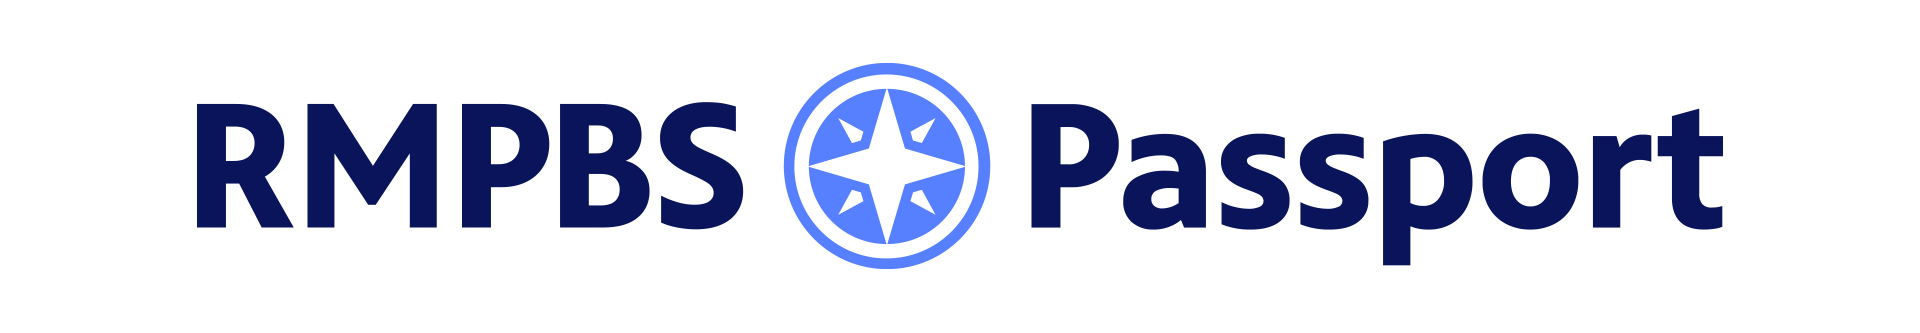 RMPBS Passport logo